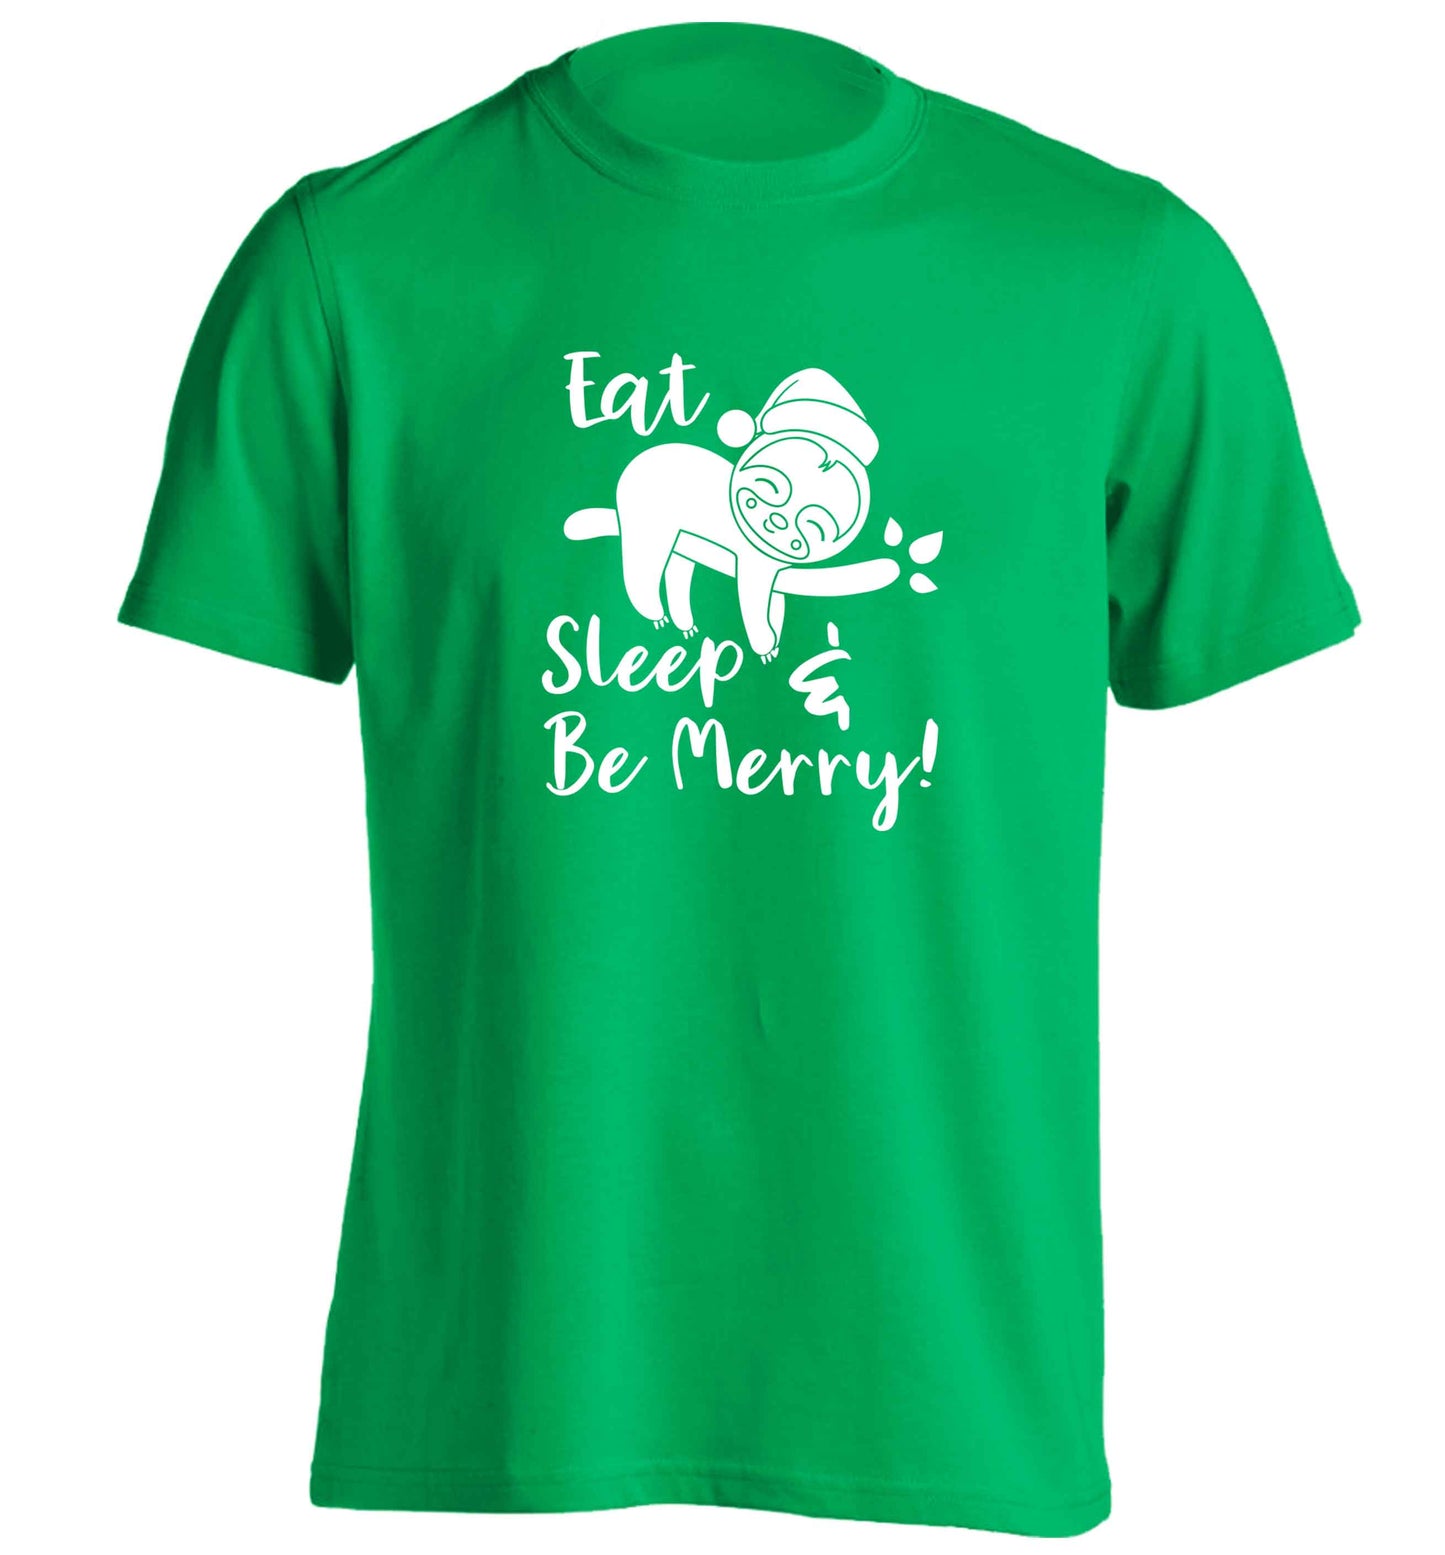 Merry Slothmas adults unisex green Tshirt 2XL